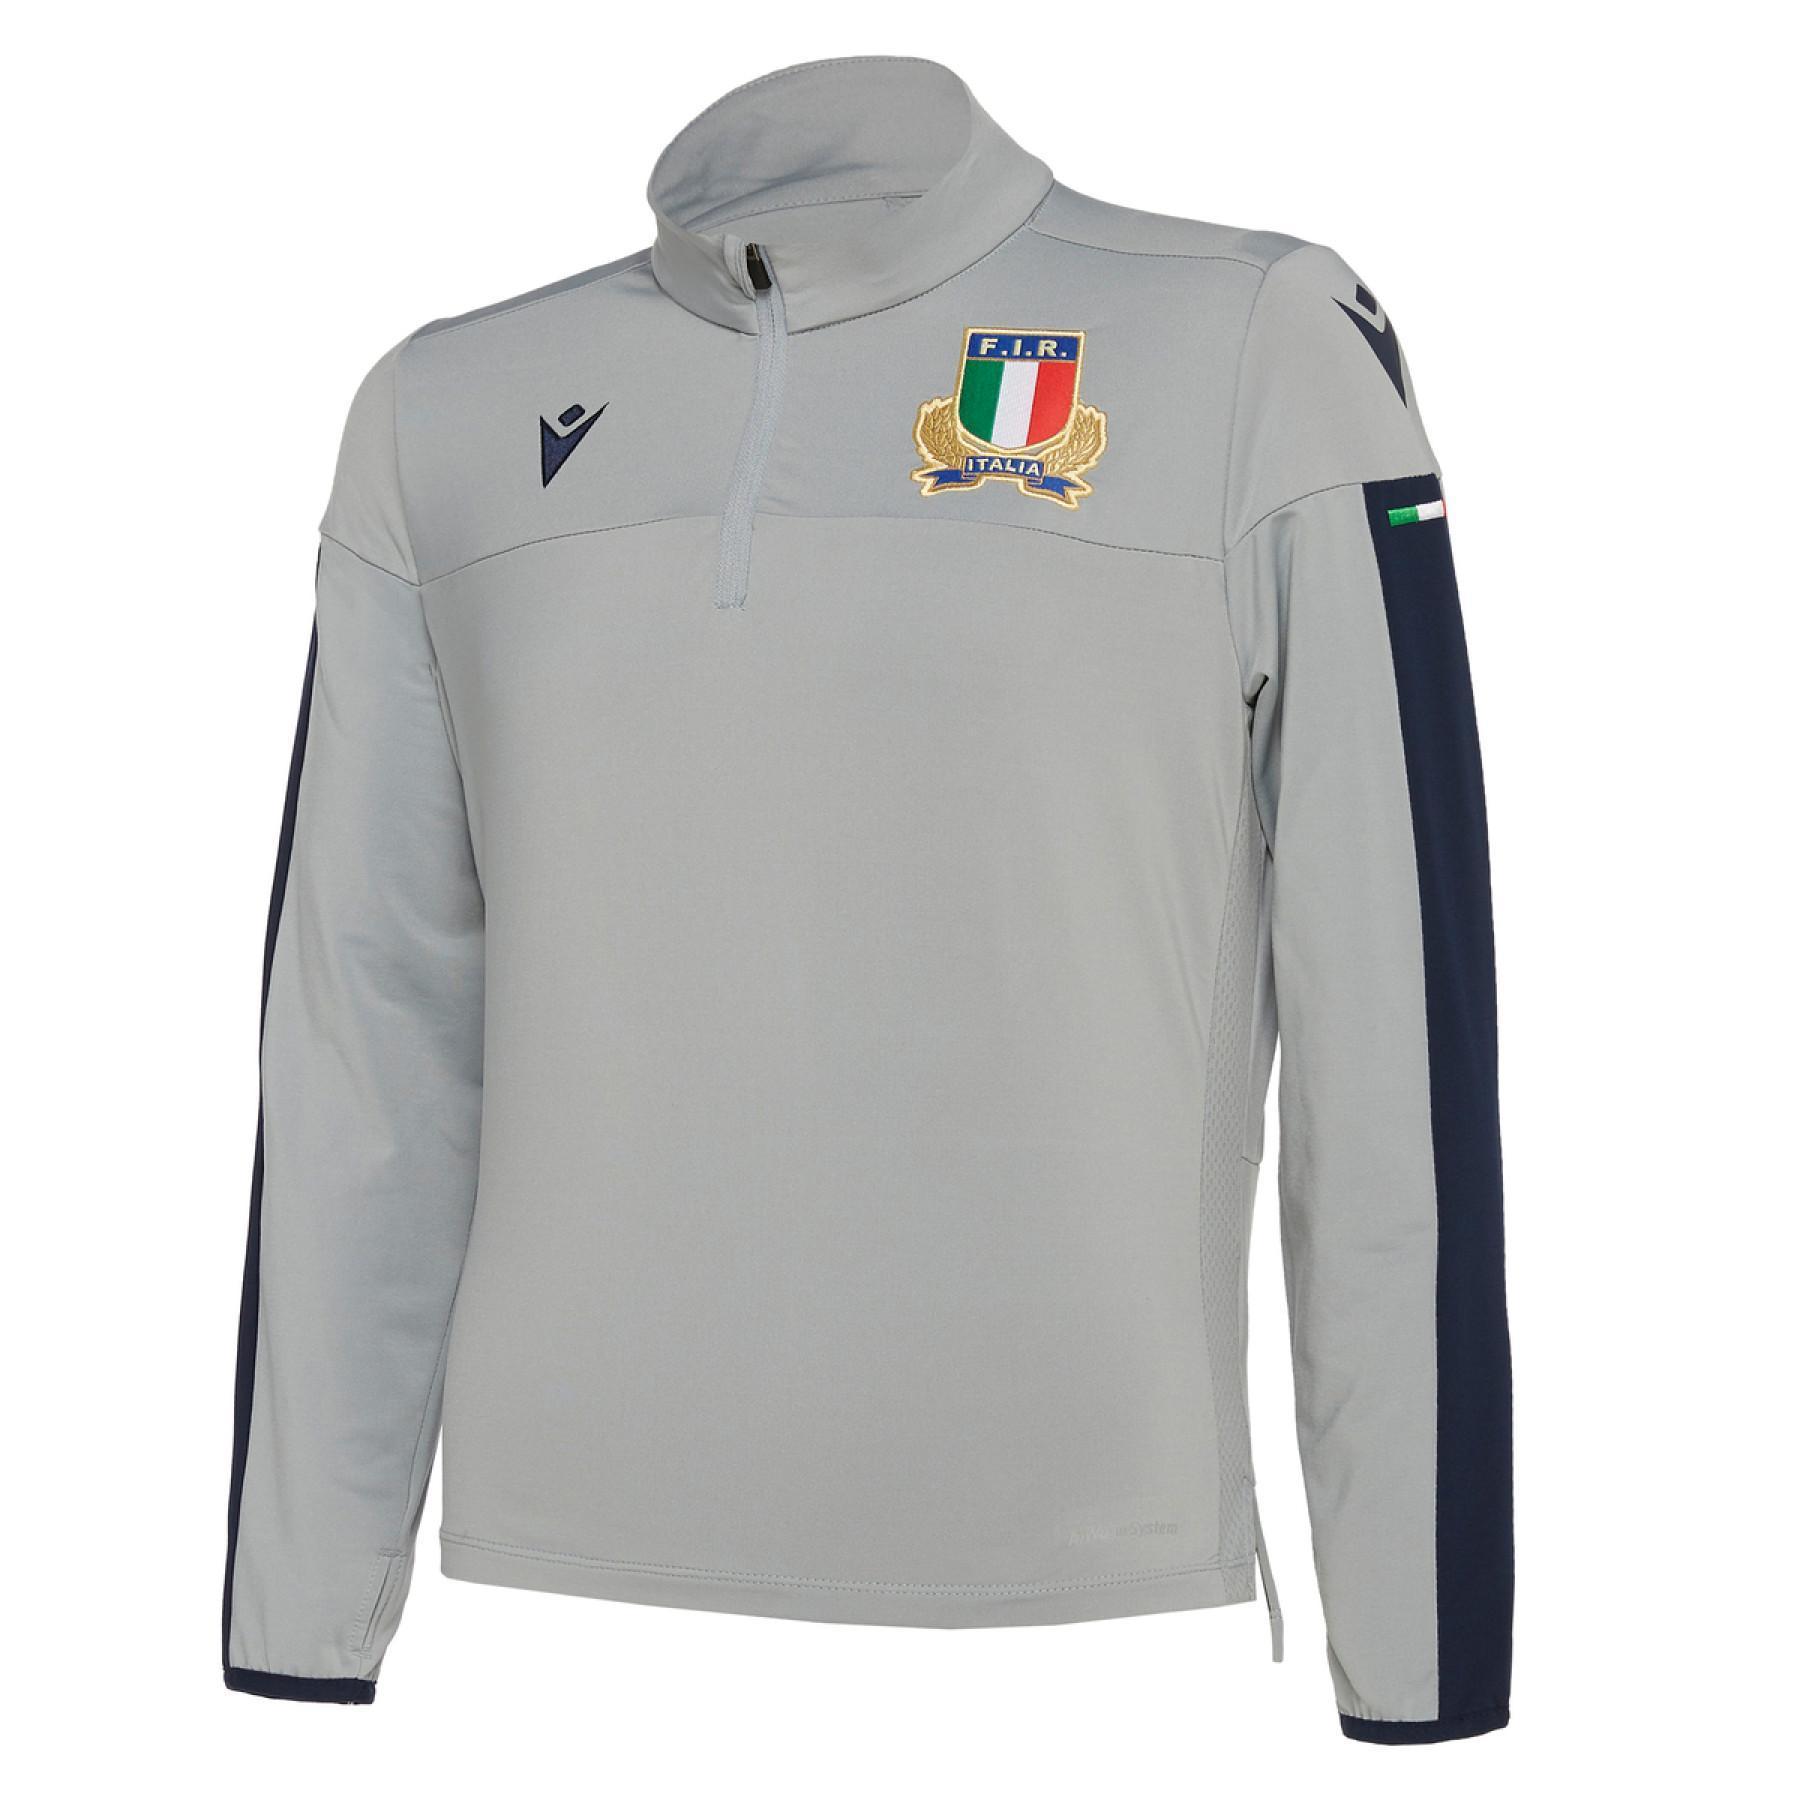 Kinder sweatshirt Italie rugby 2019